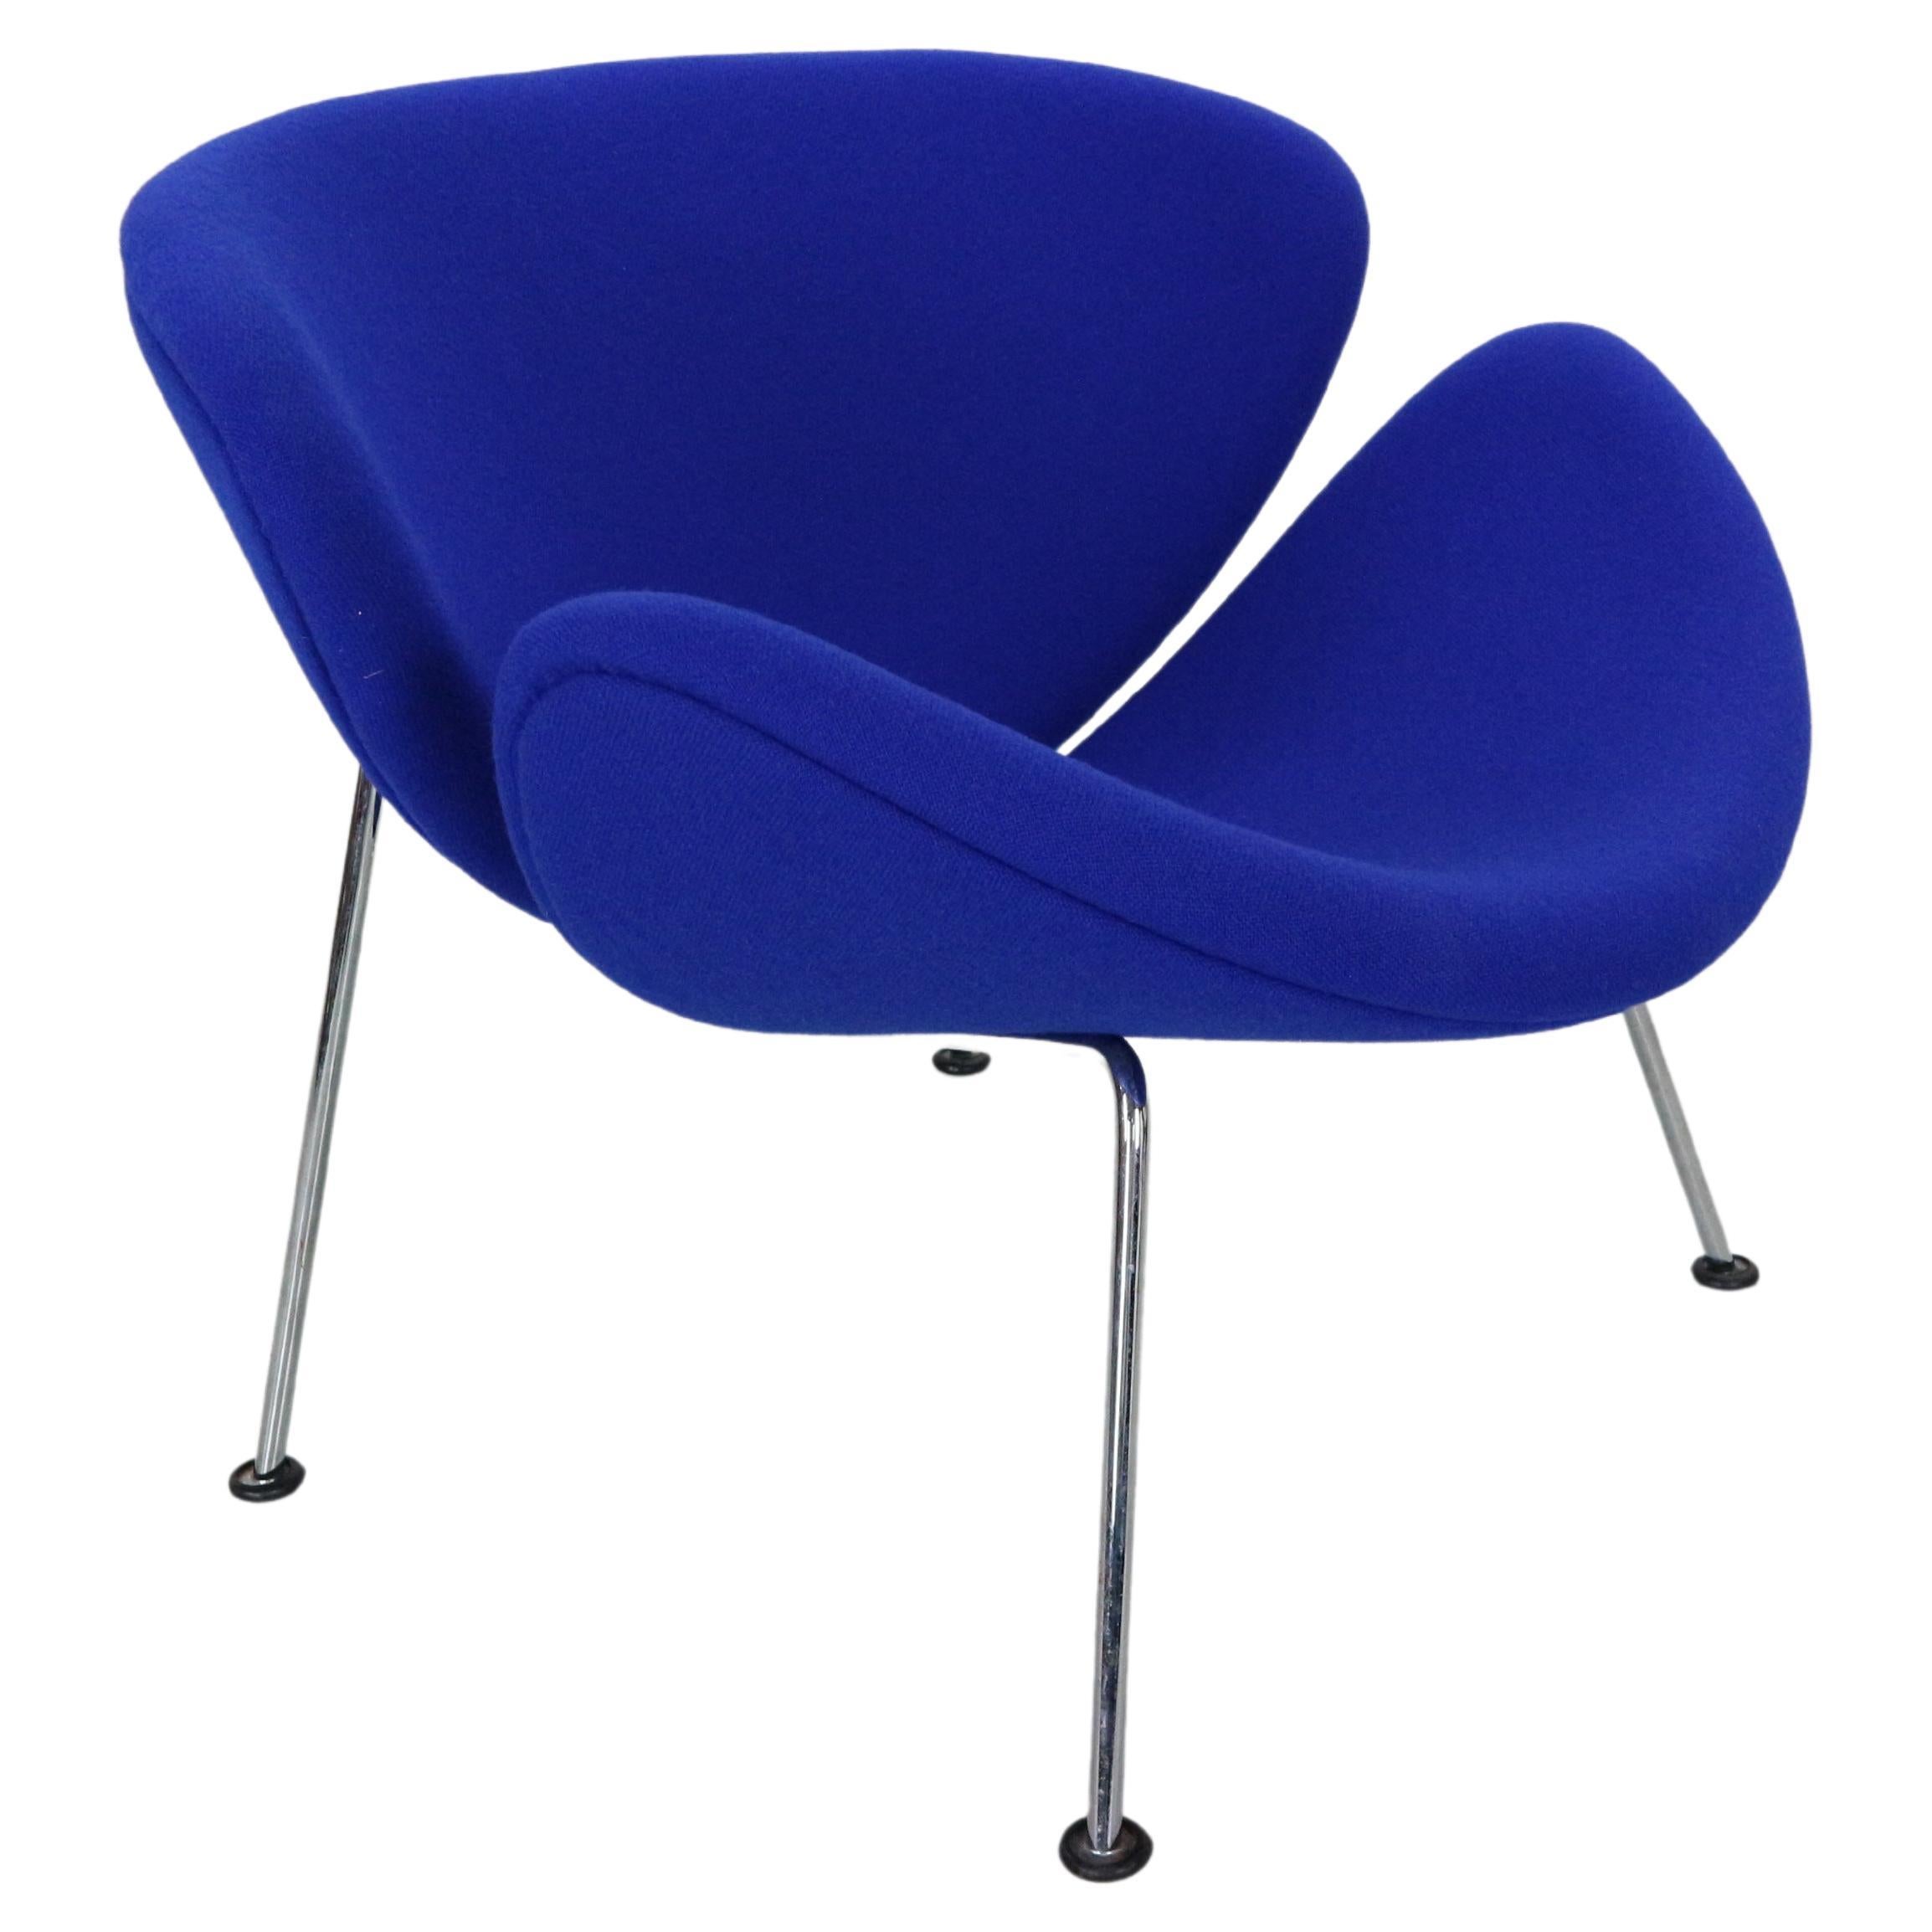 Pierre Paulin "Orange Slice" Lounge Chair New Upholstery for Artifort, 1960s